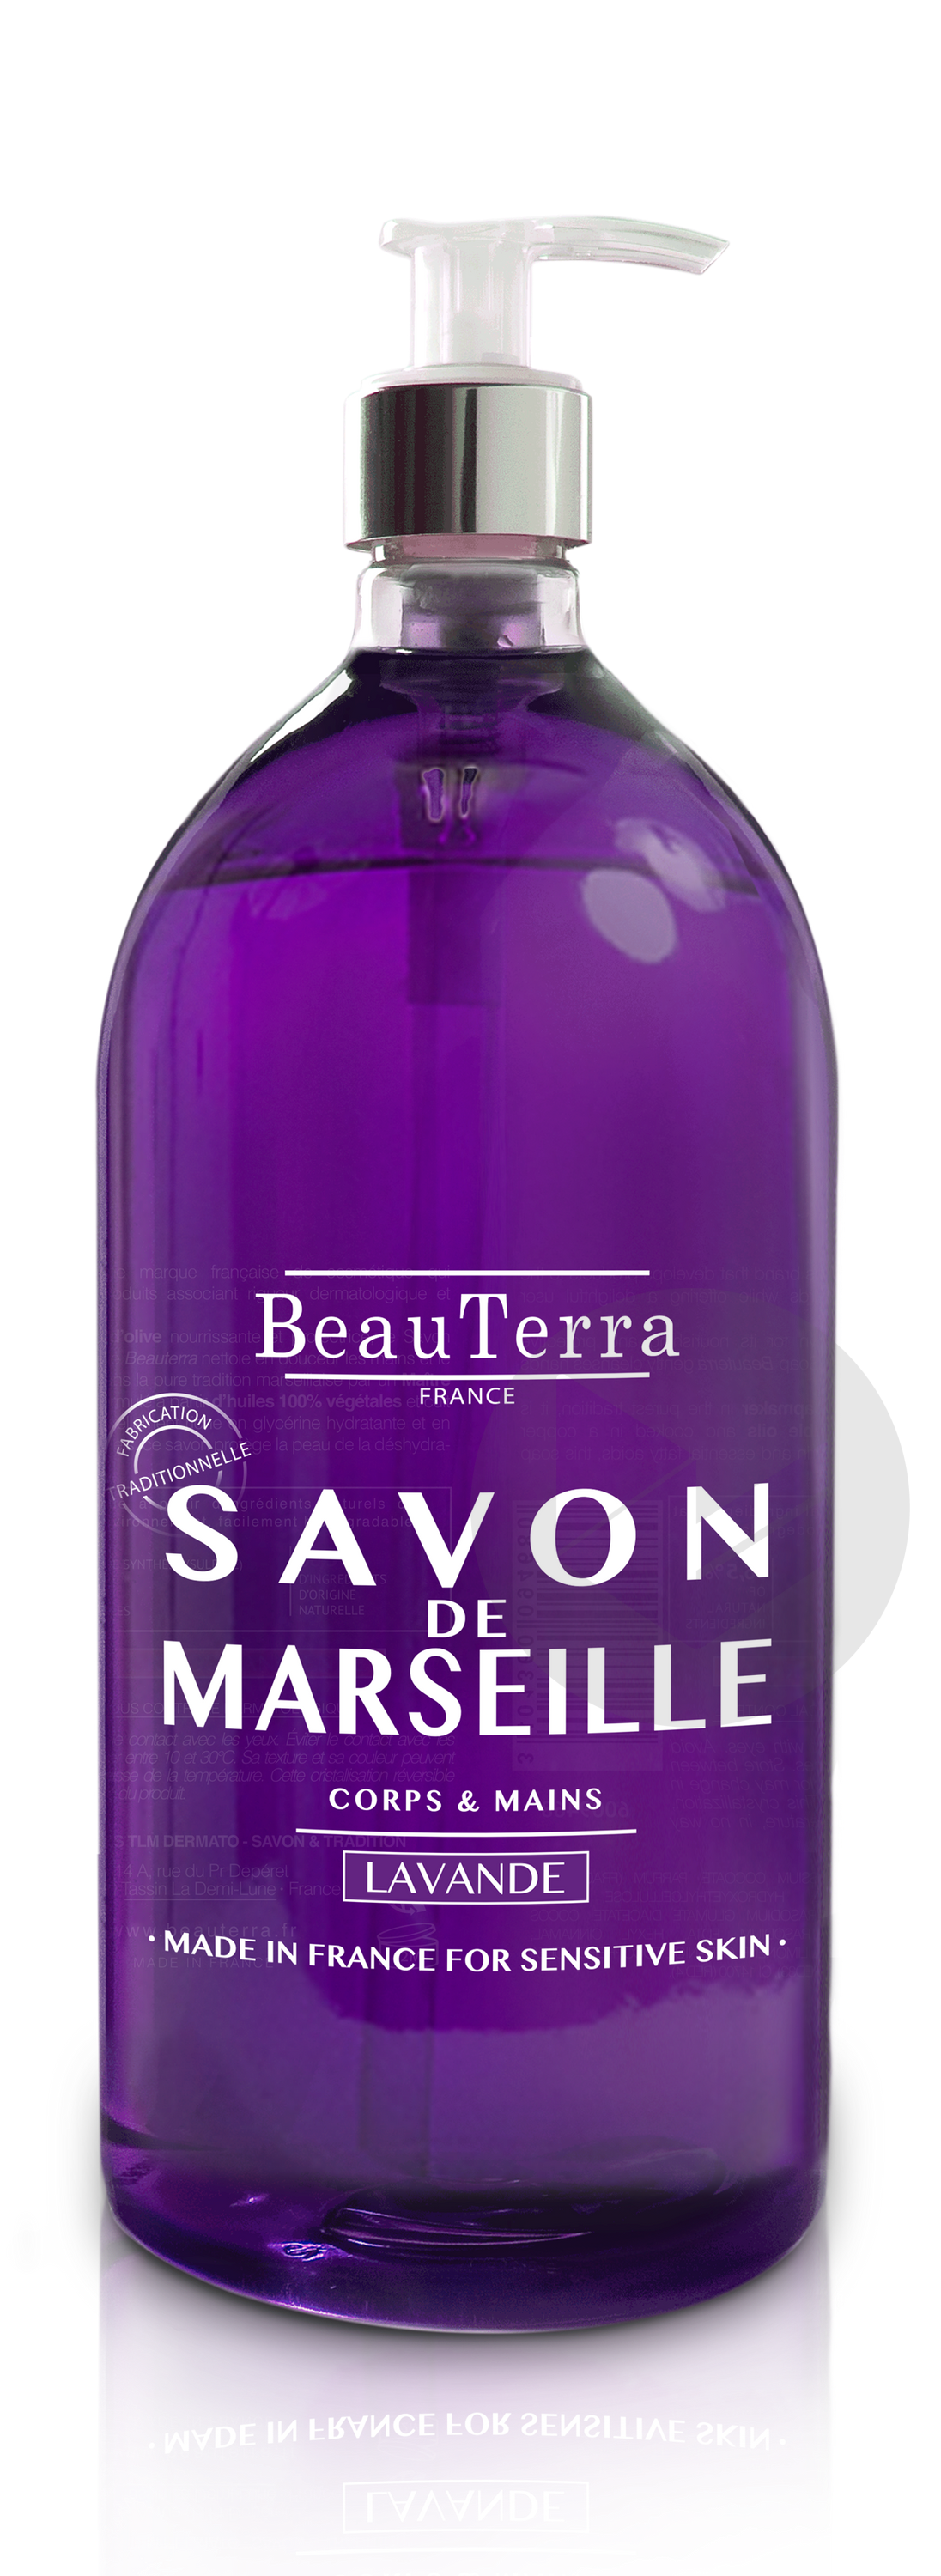 Savon de Marseille liquide - Lavande - 300ml